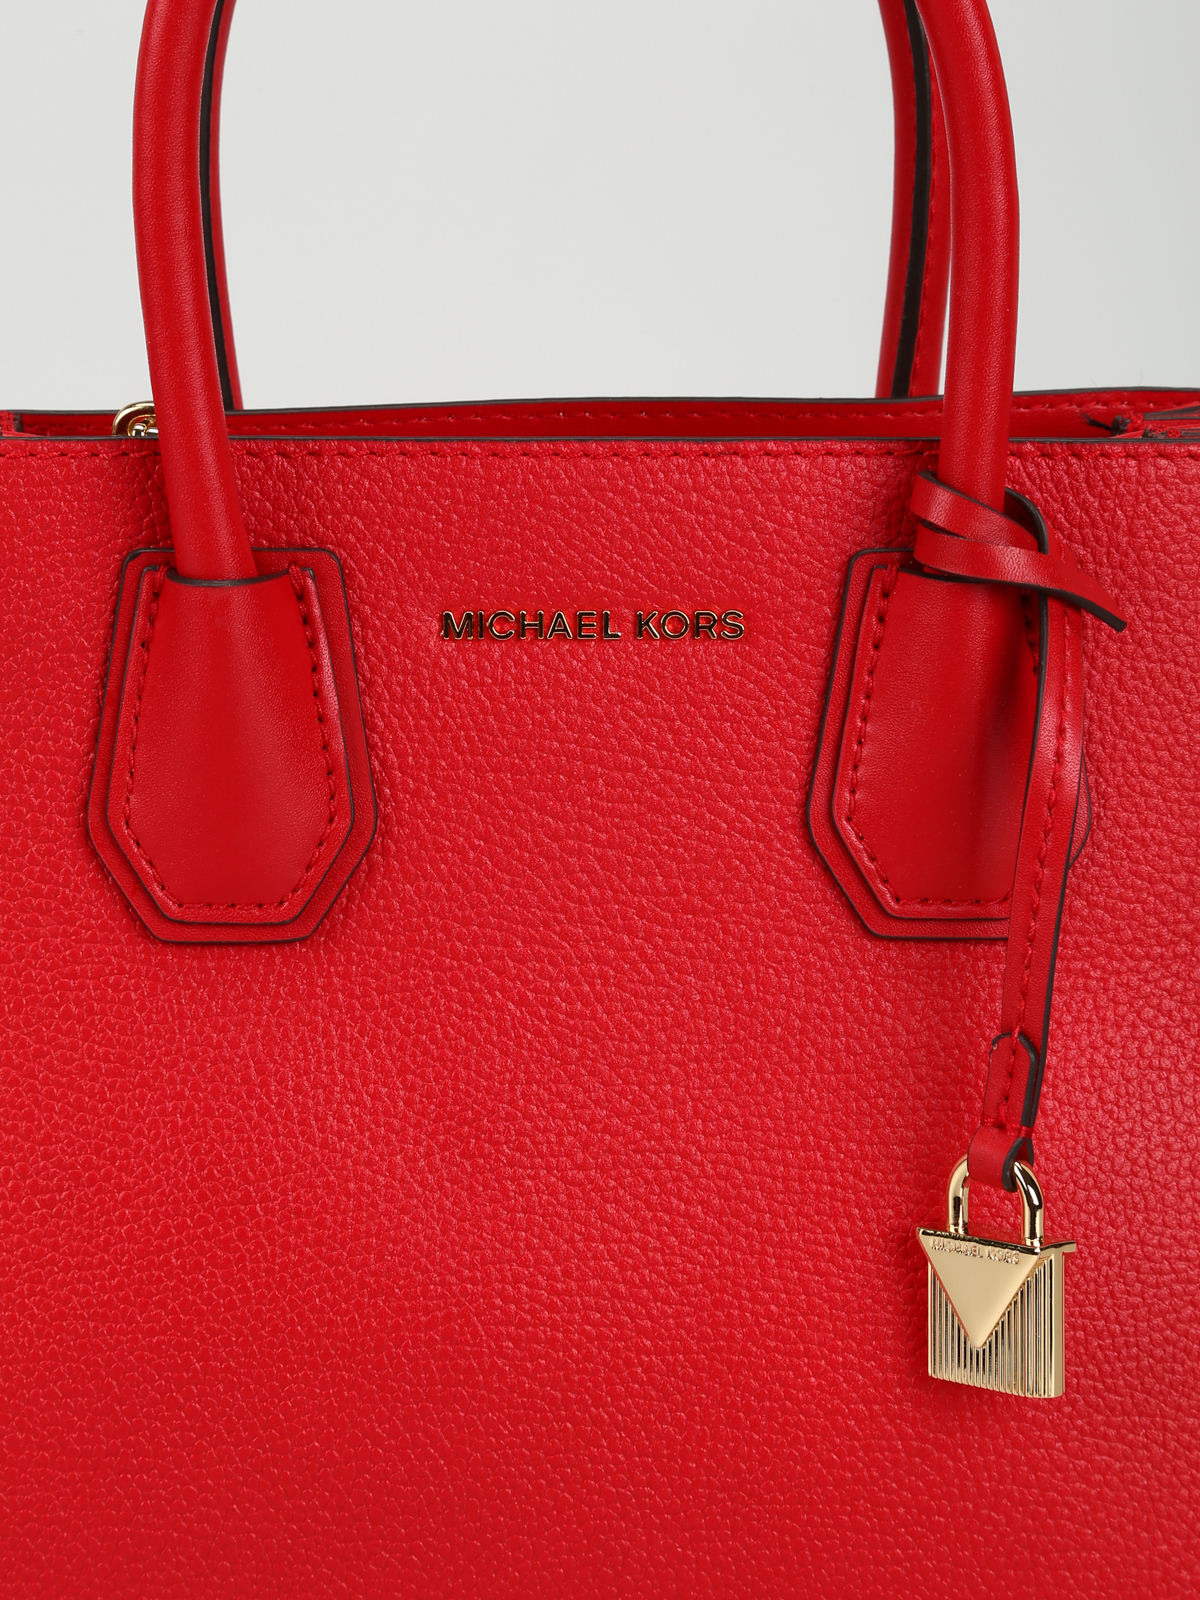 Cross body bags Michael Kors - Mercer M red leather bag - 30F8GM9M2T683